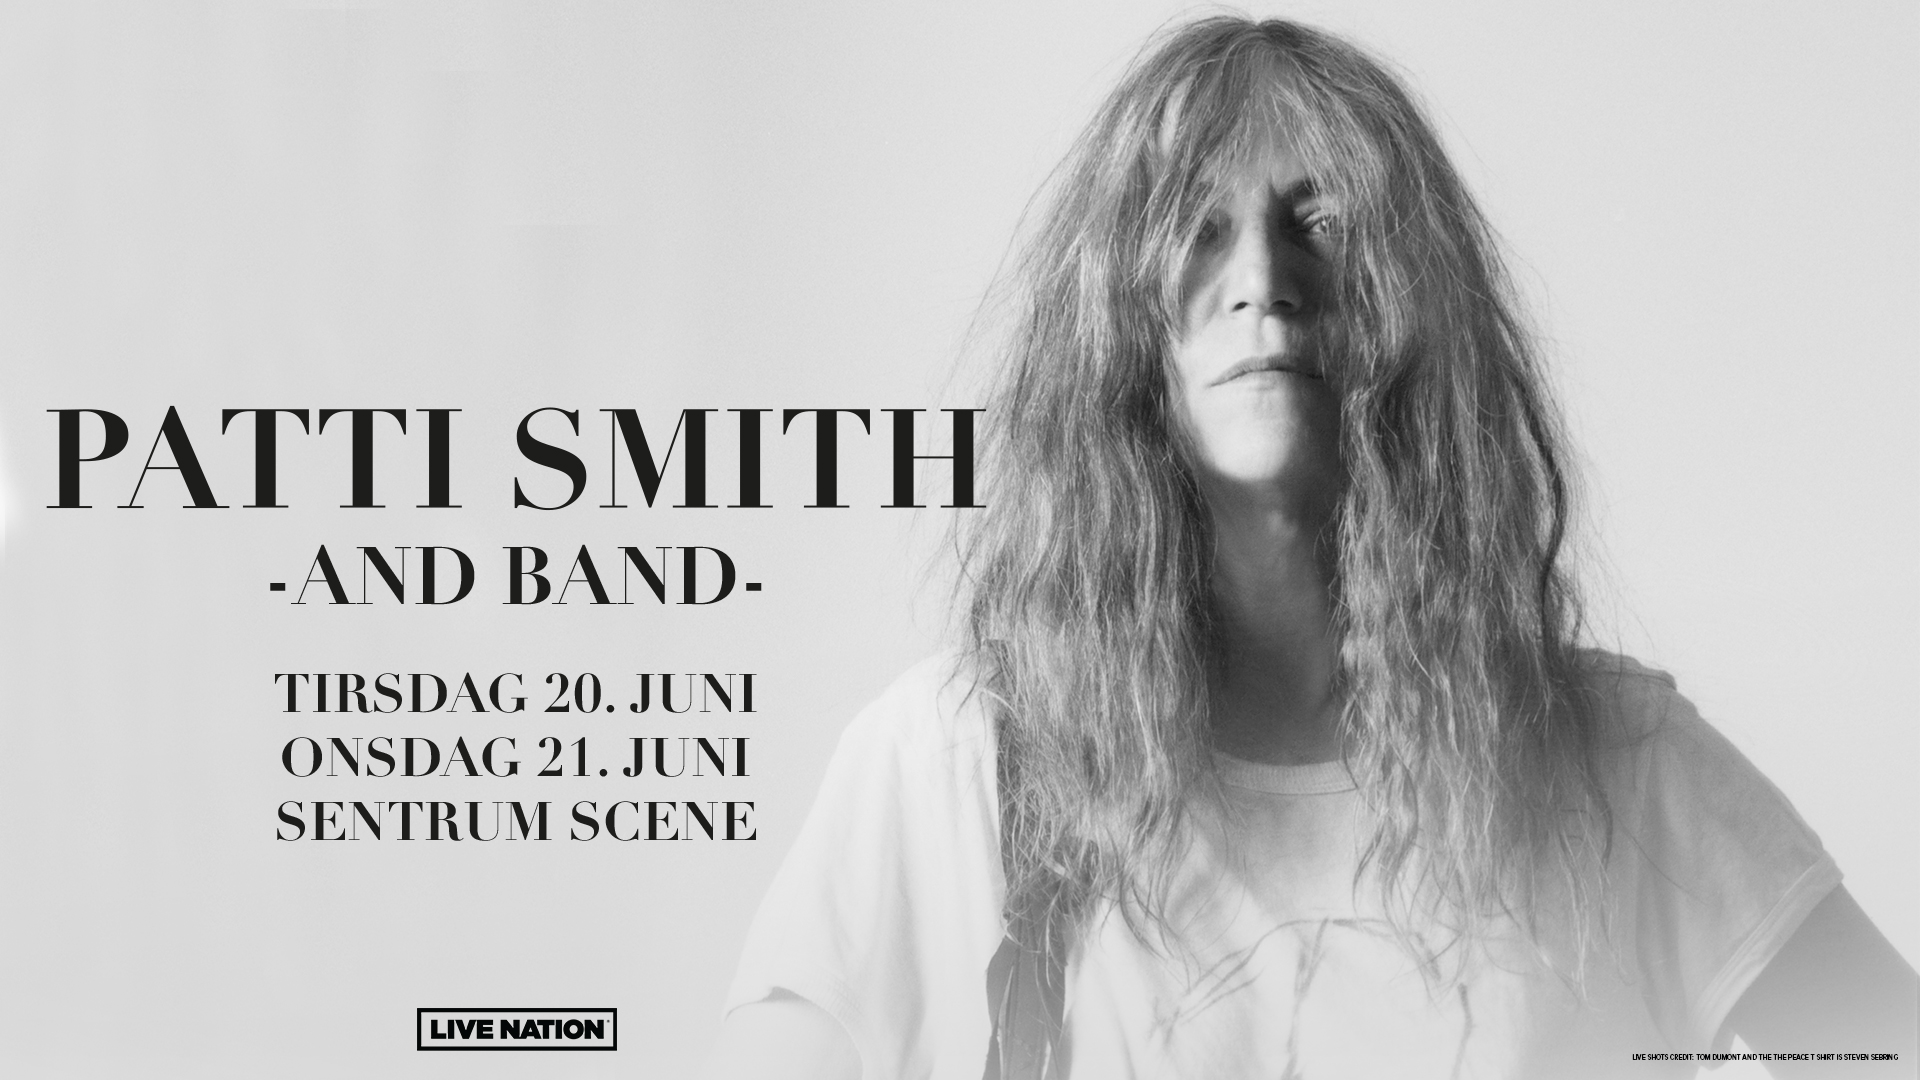 PATTI SMITH – spiller to ganger i Oslo